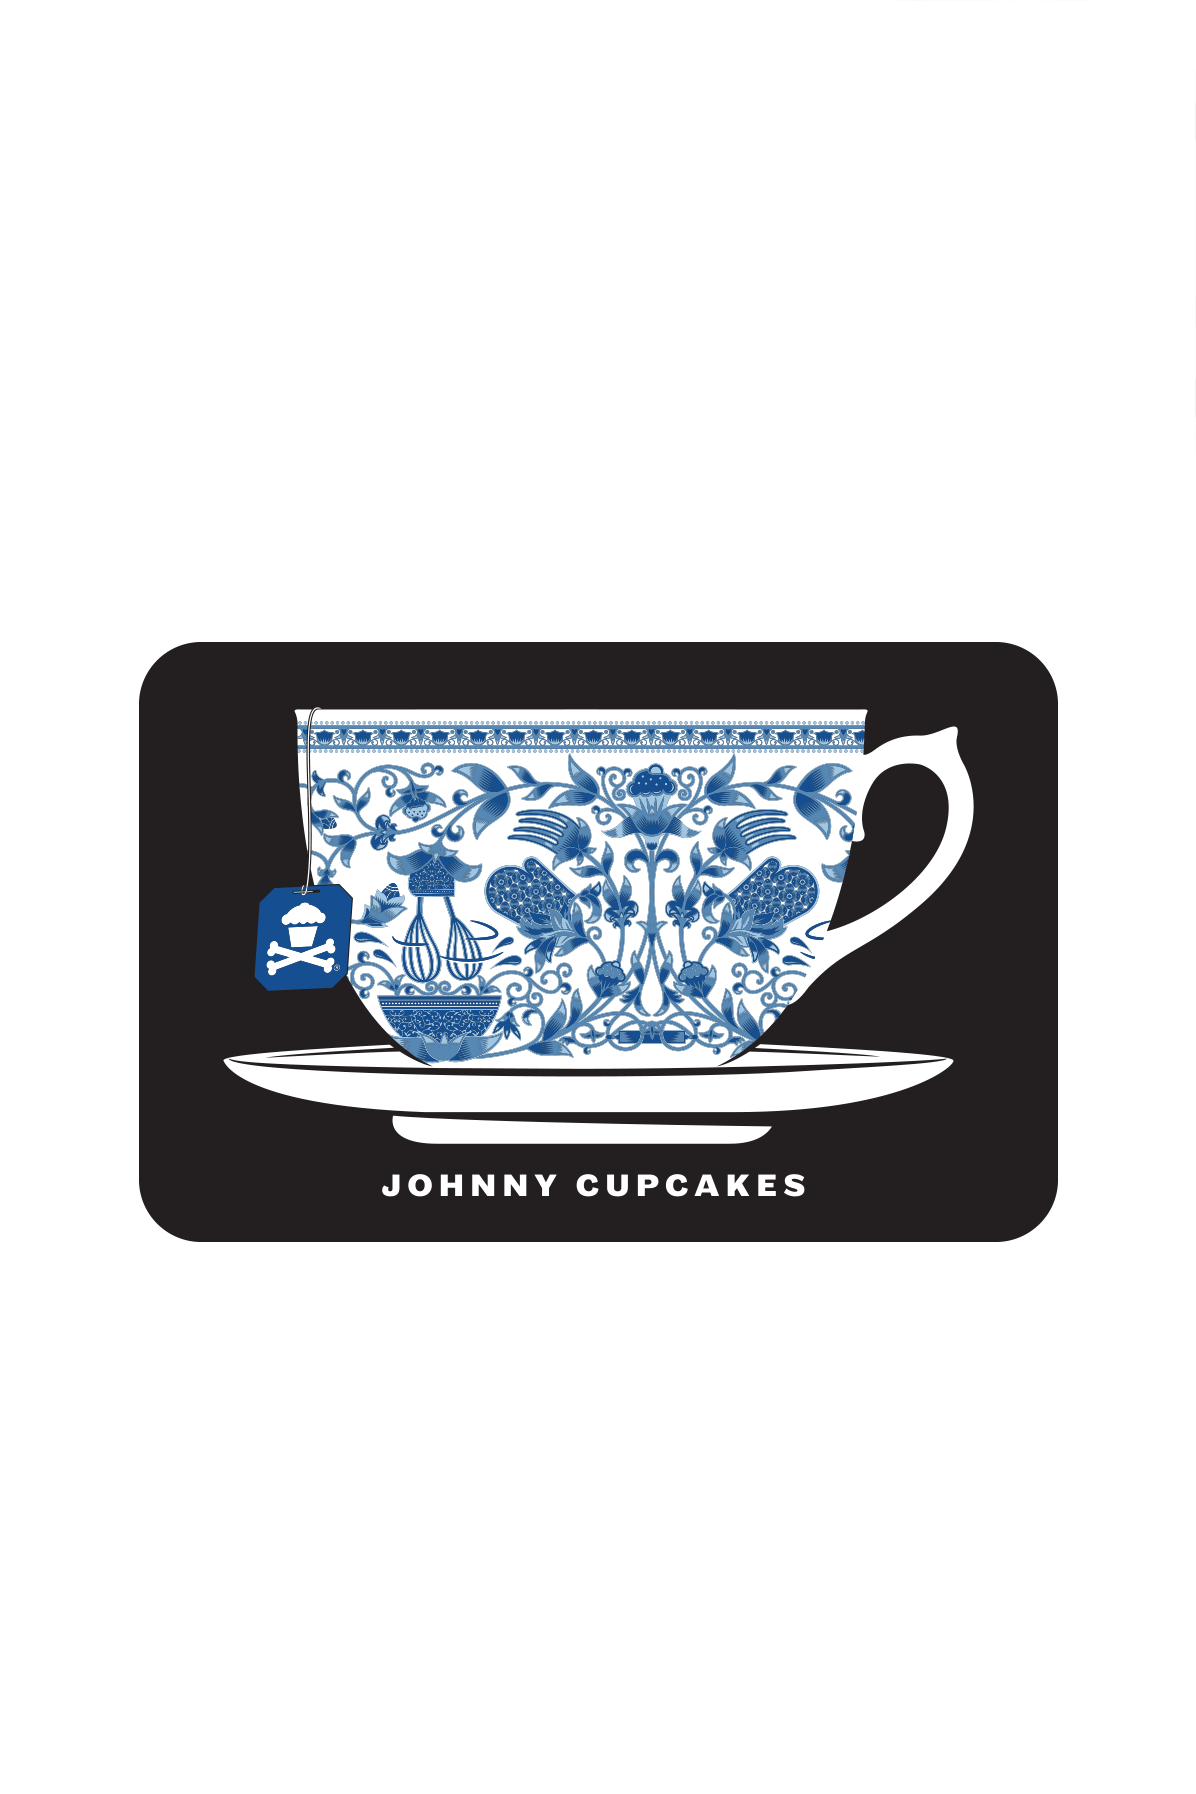 Teacup Treats Tee w/ Sticker